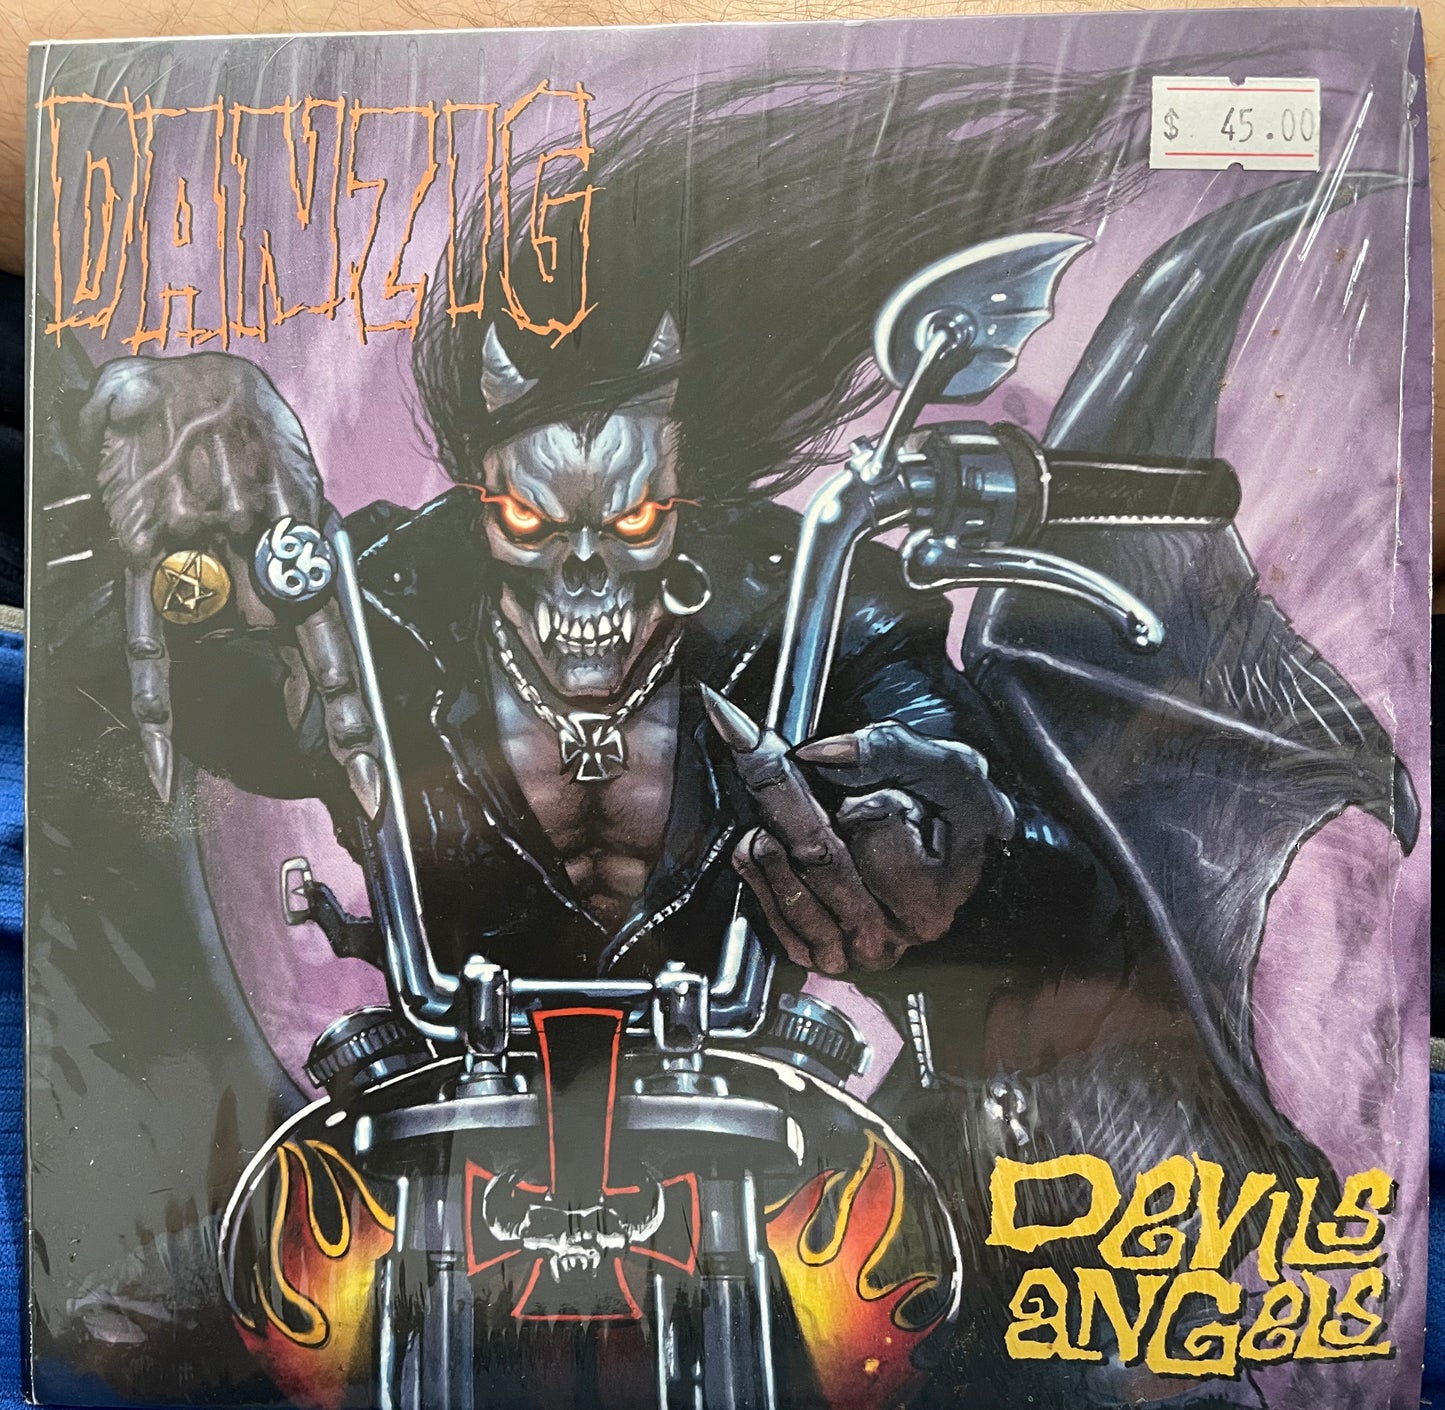 Danzig - Devils Angels (2015 German 7 inch)